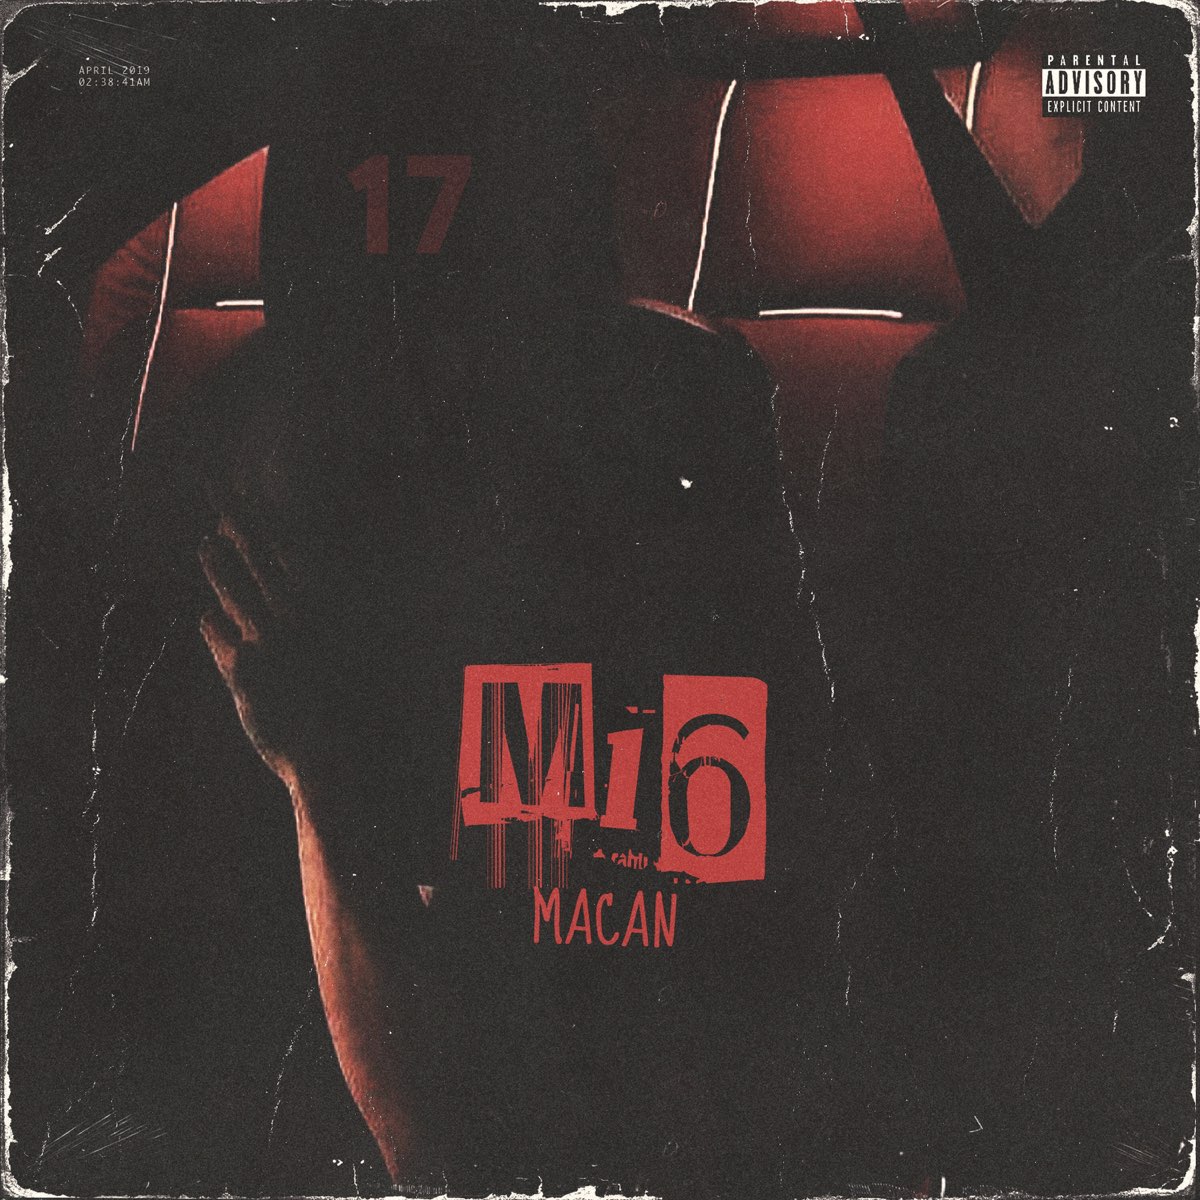 M16 Macan